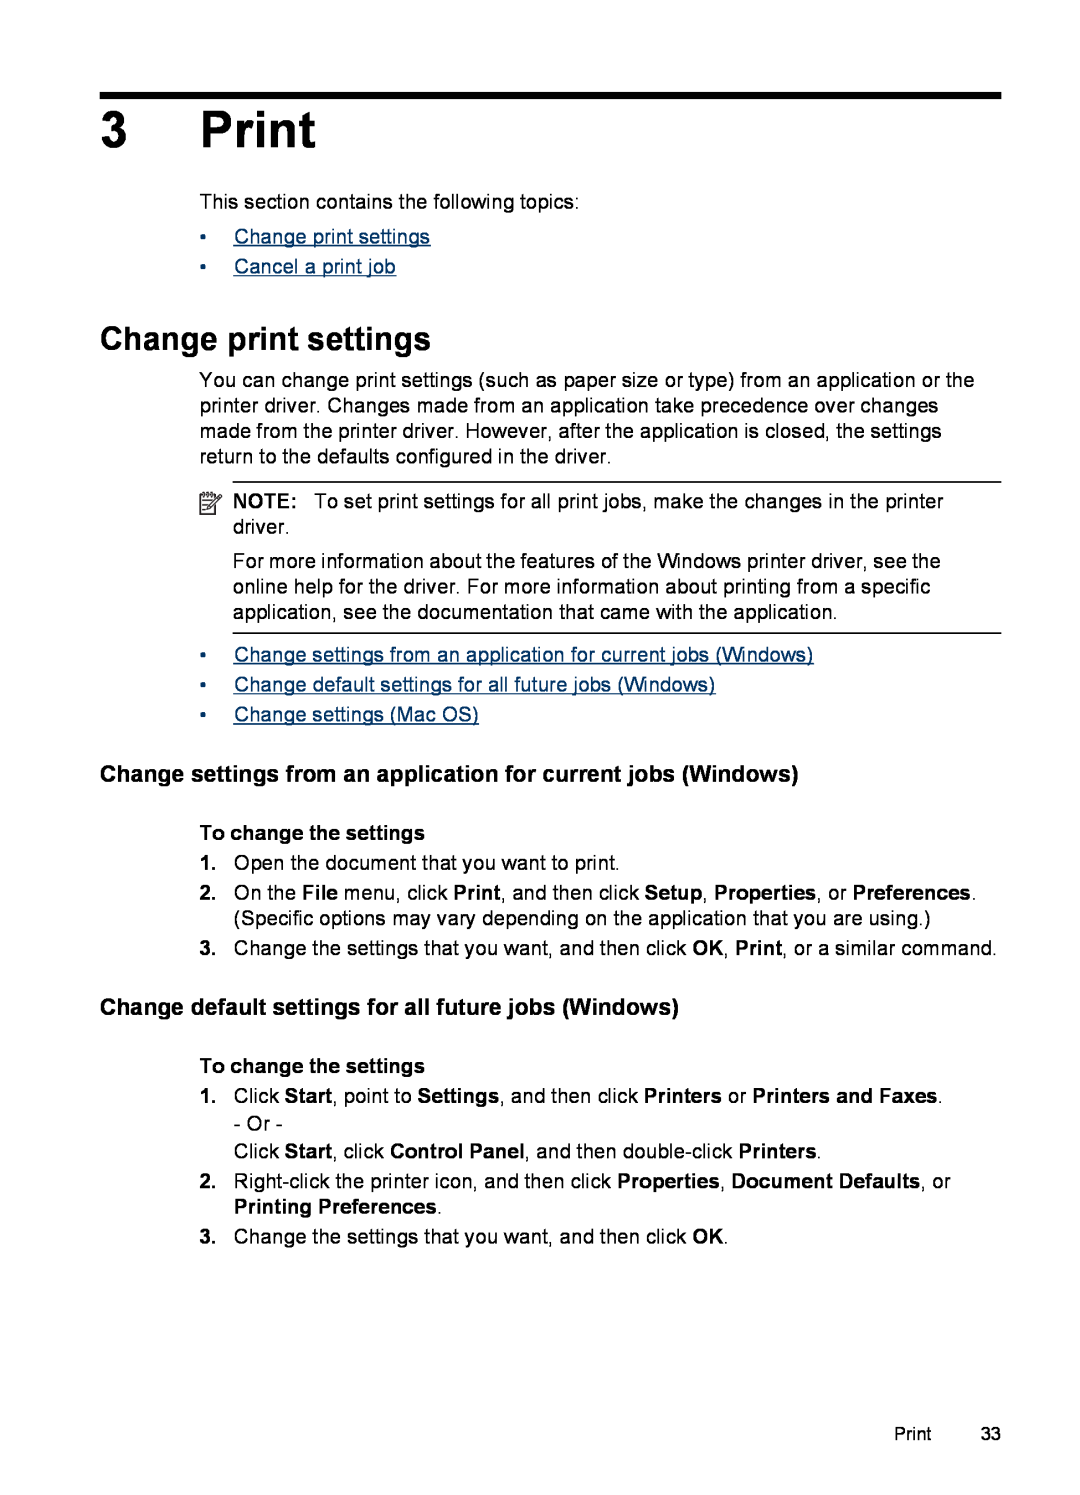 HP J4580, J4680, J4660, J4540 Print, Change print settings, Change settings from an application for current jobs Windows 